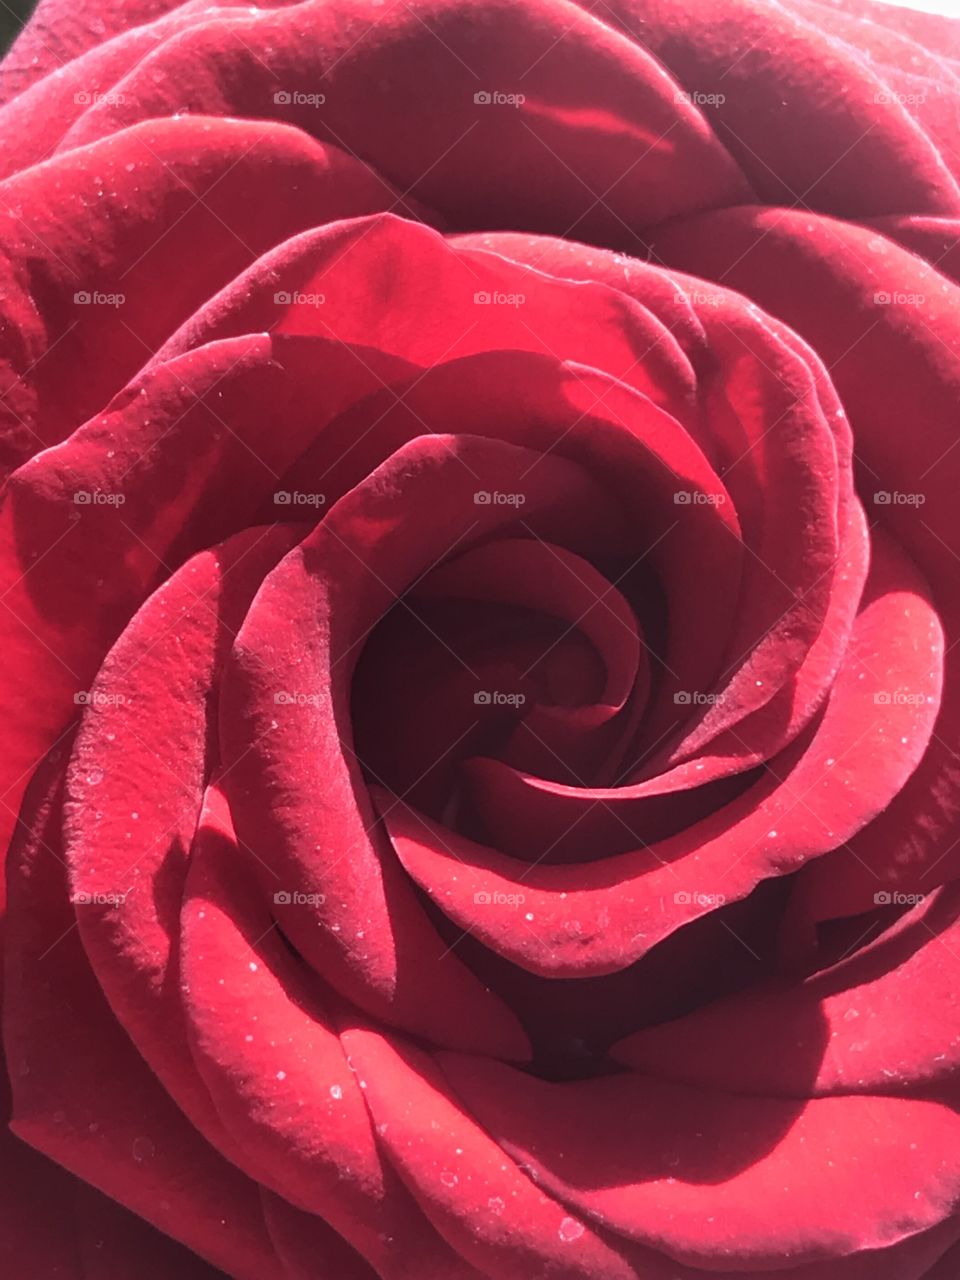 A beautiful rose up-close